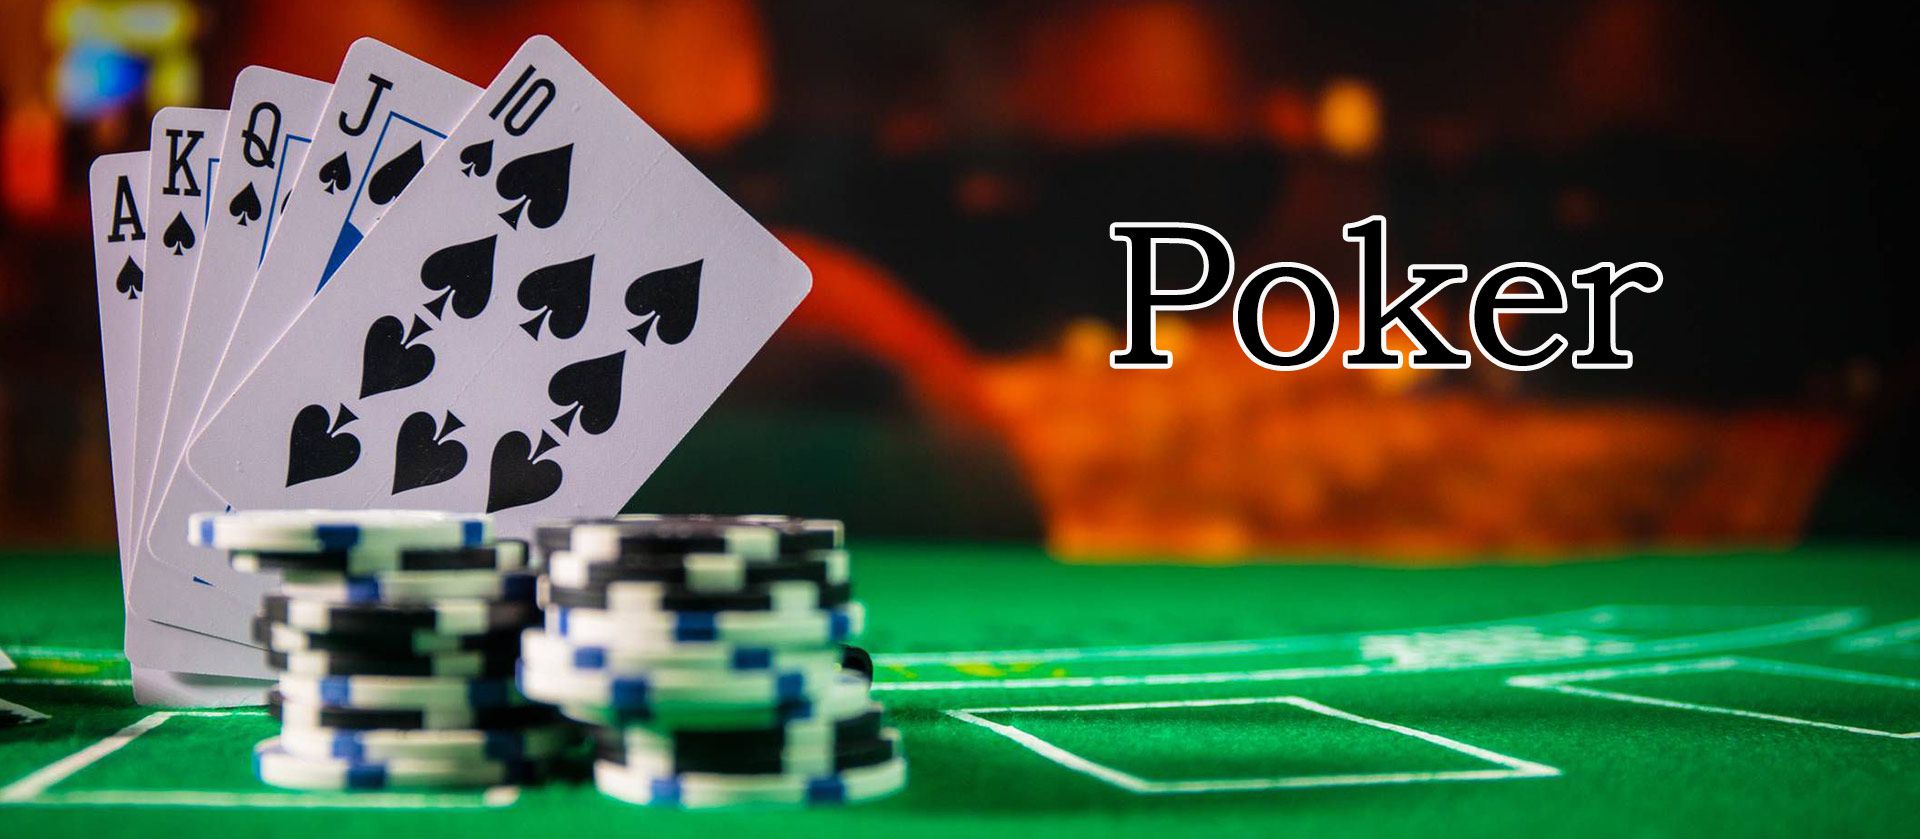 Poker in the UK online casino.